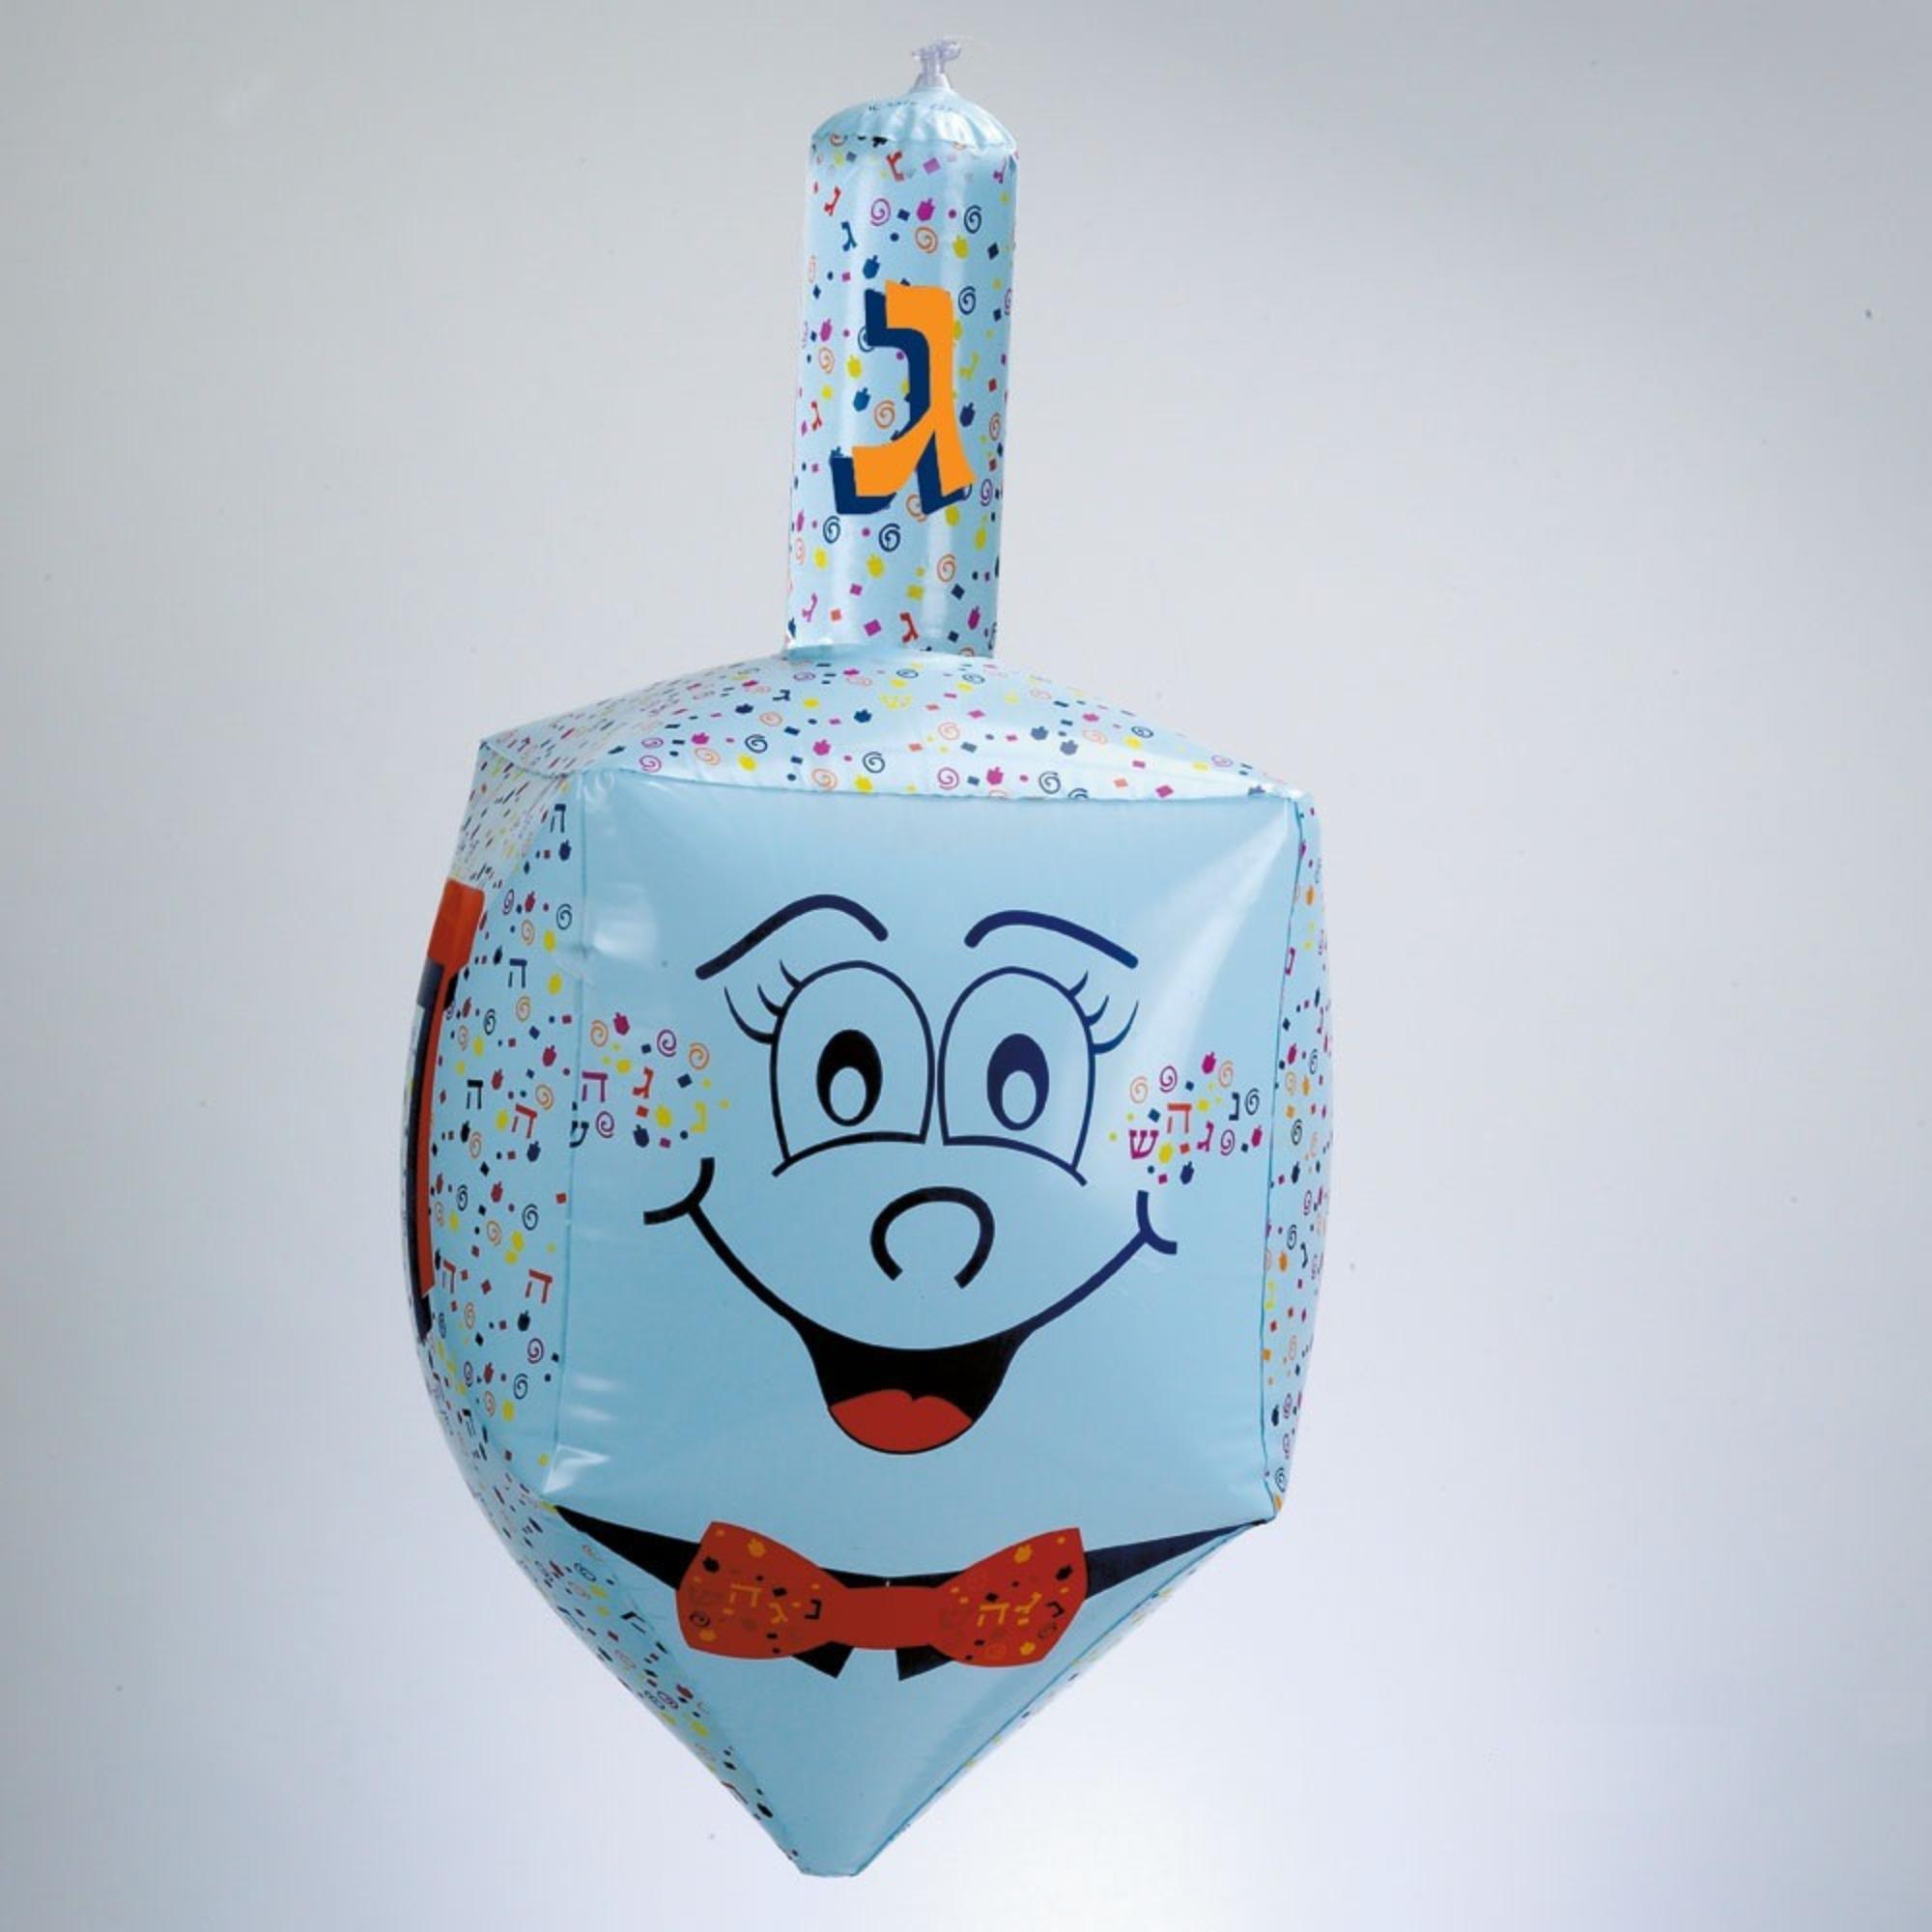 Rite Lite 24" Large Smiling Face Inflatable Hanukkah Dreidel - Blue/Red - image 1 of 3